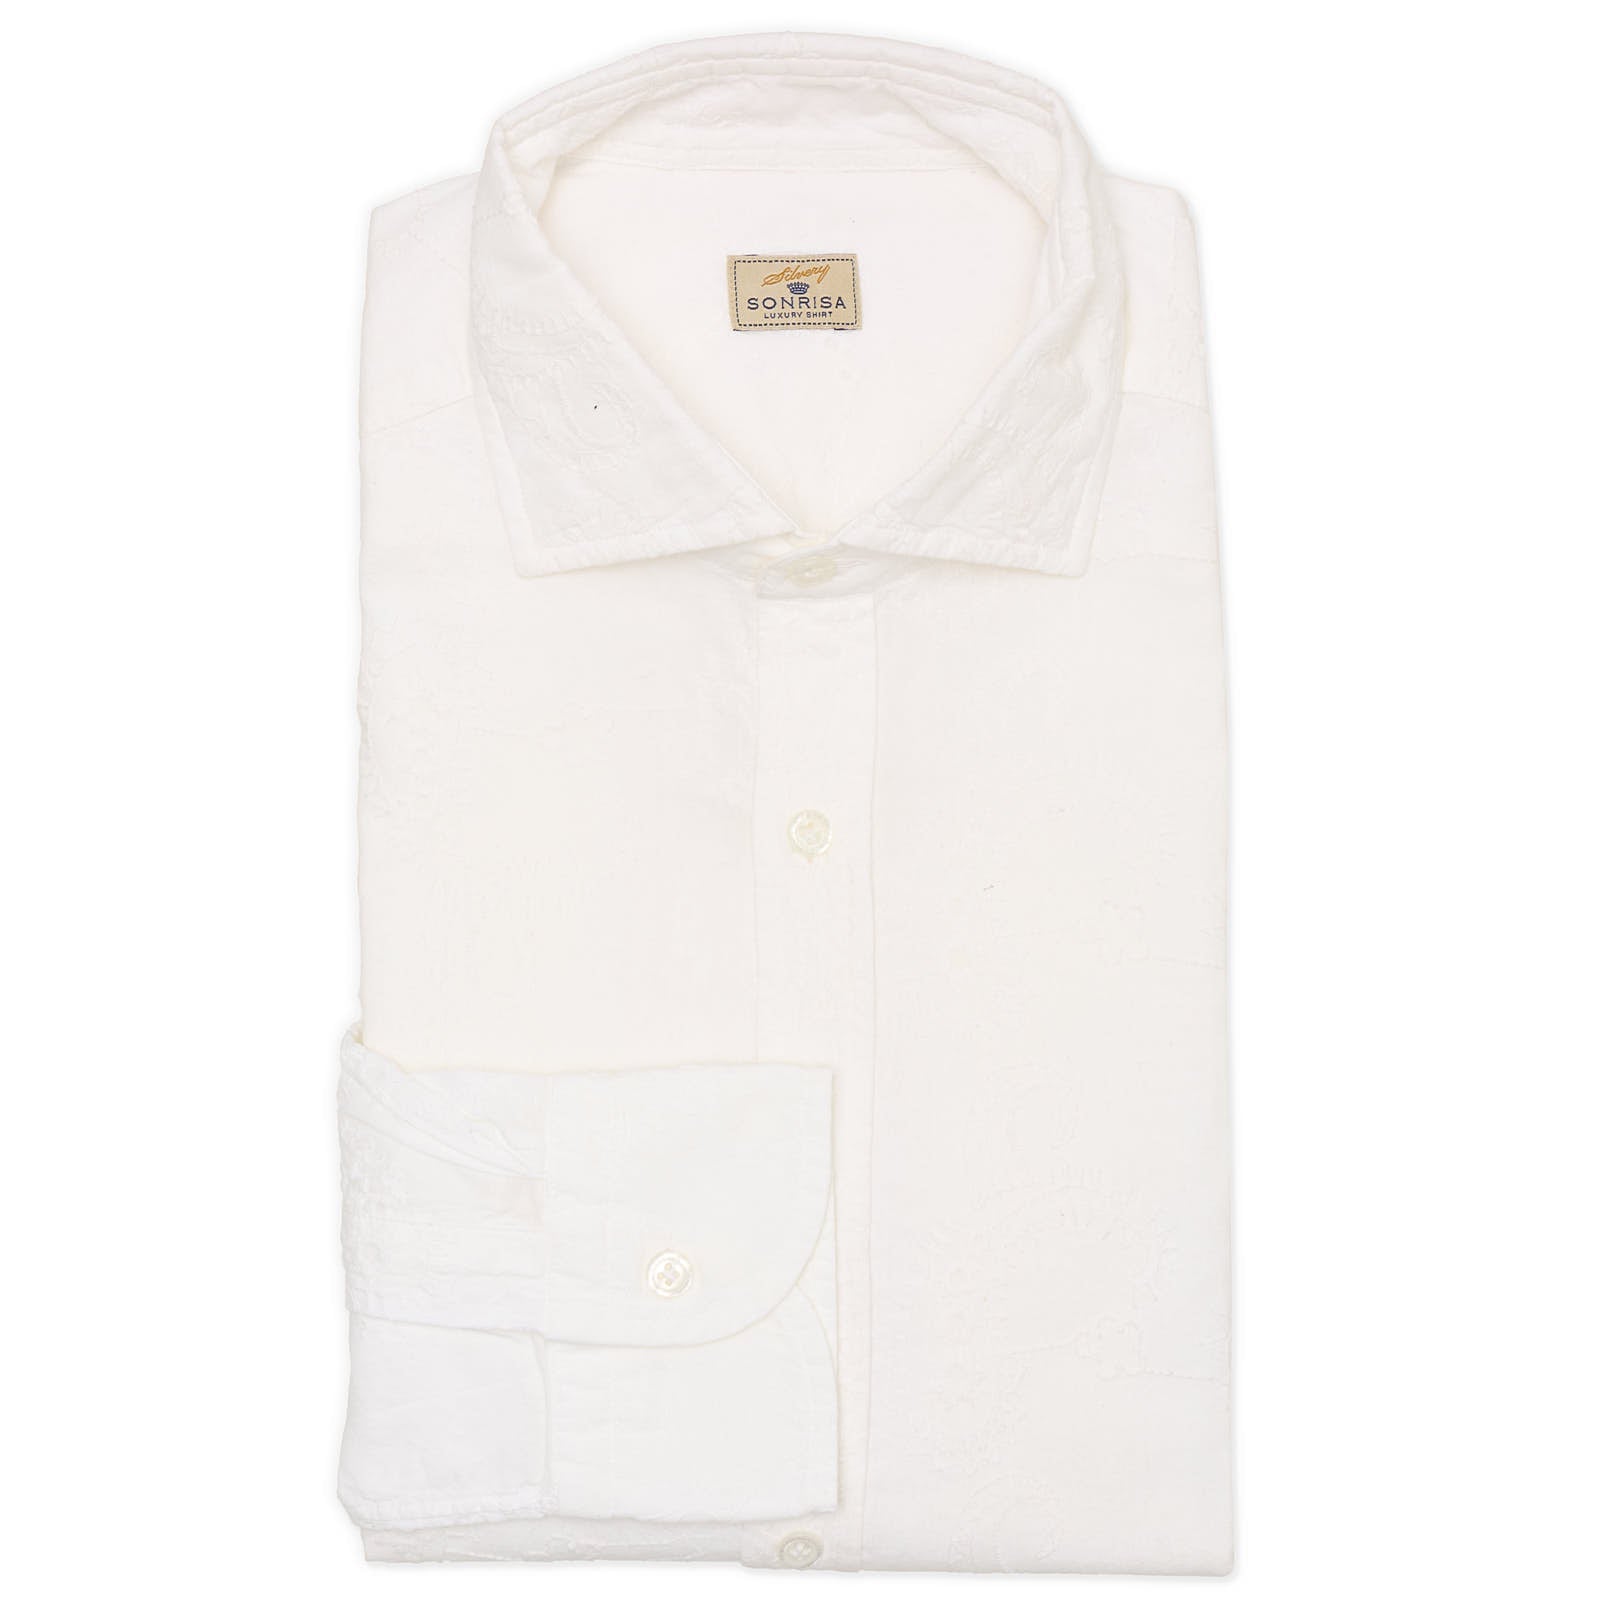 SONRISA White Cotton Casual Shirt NEW